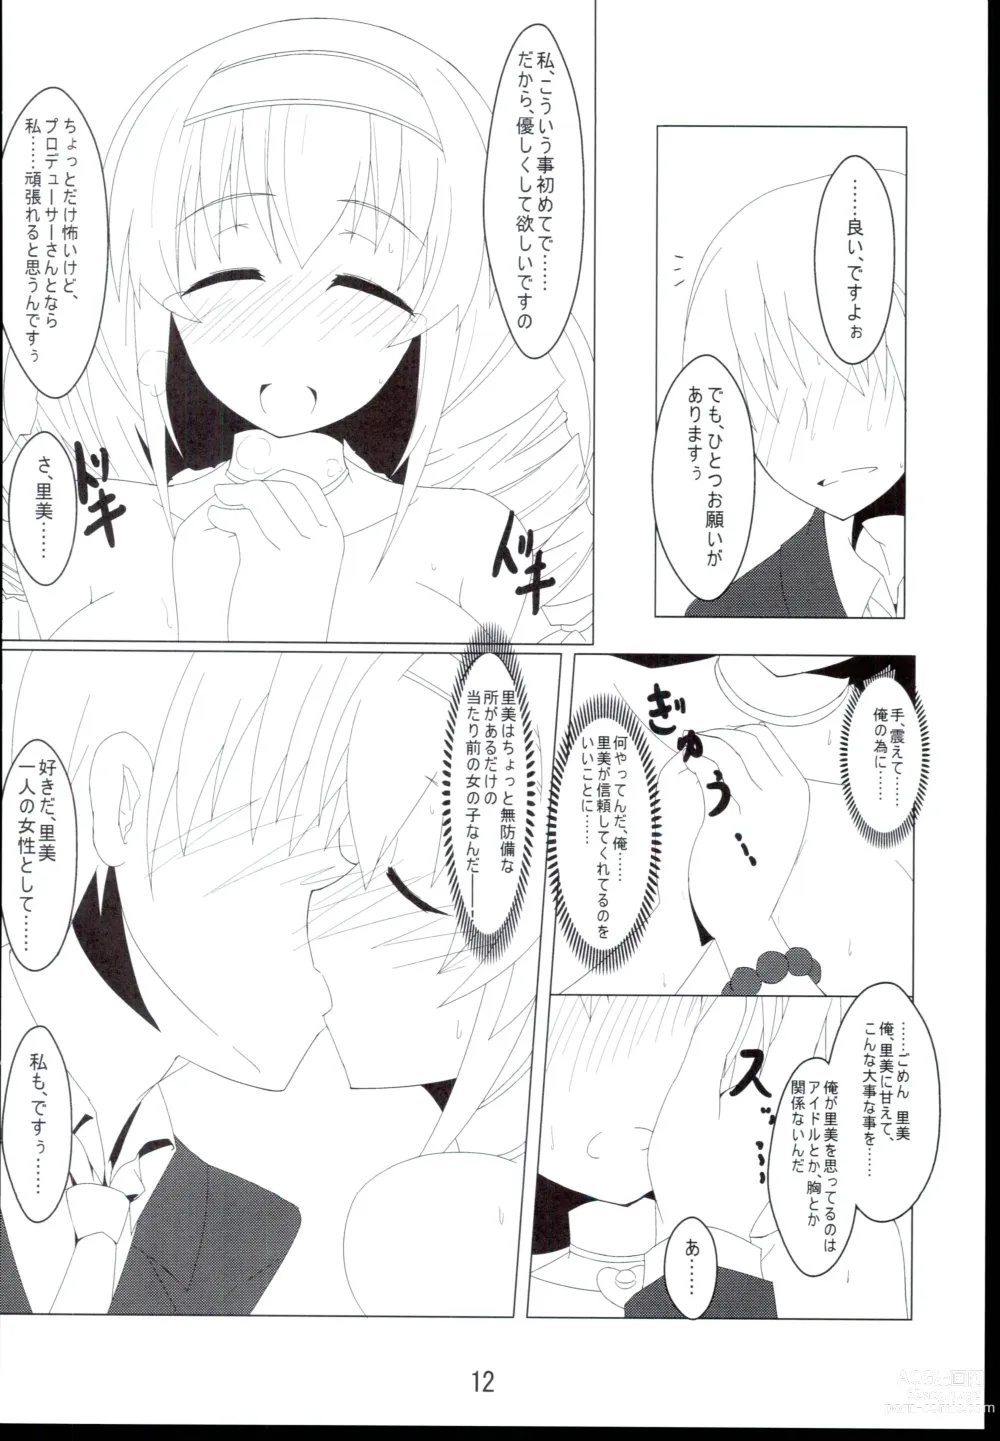 Page 12 of doujinshi Dokidoki Clumsy Girl!